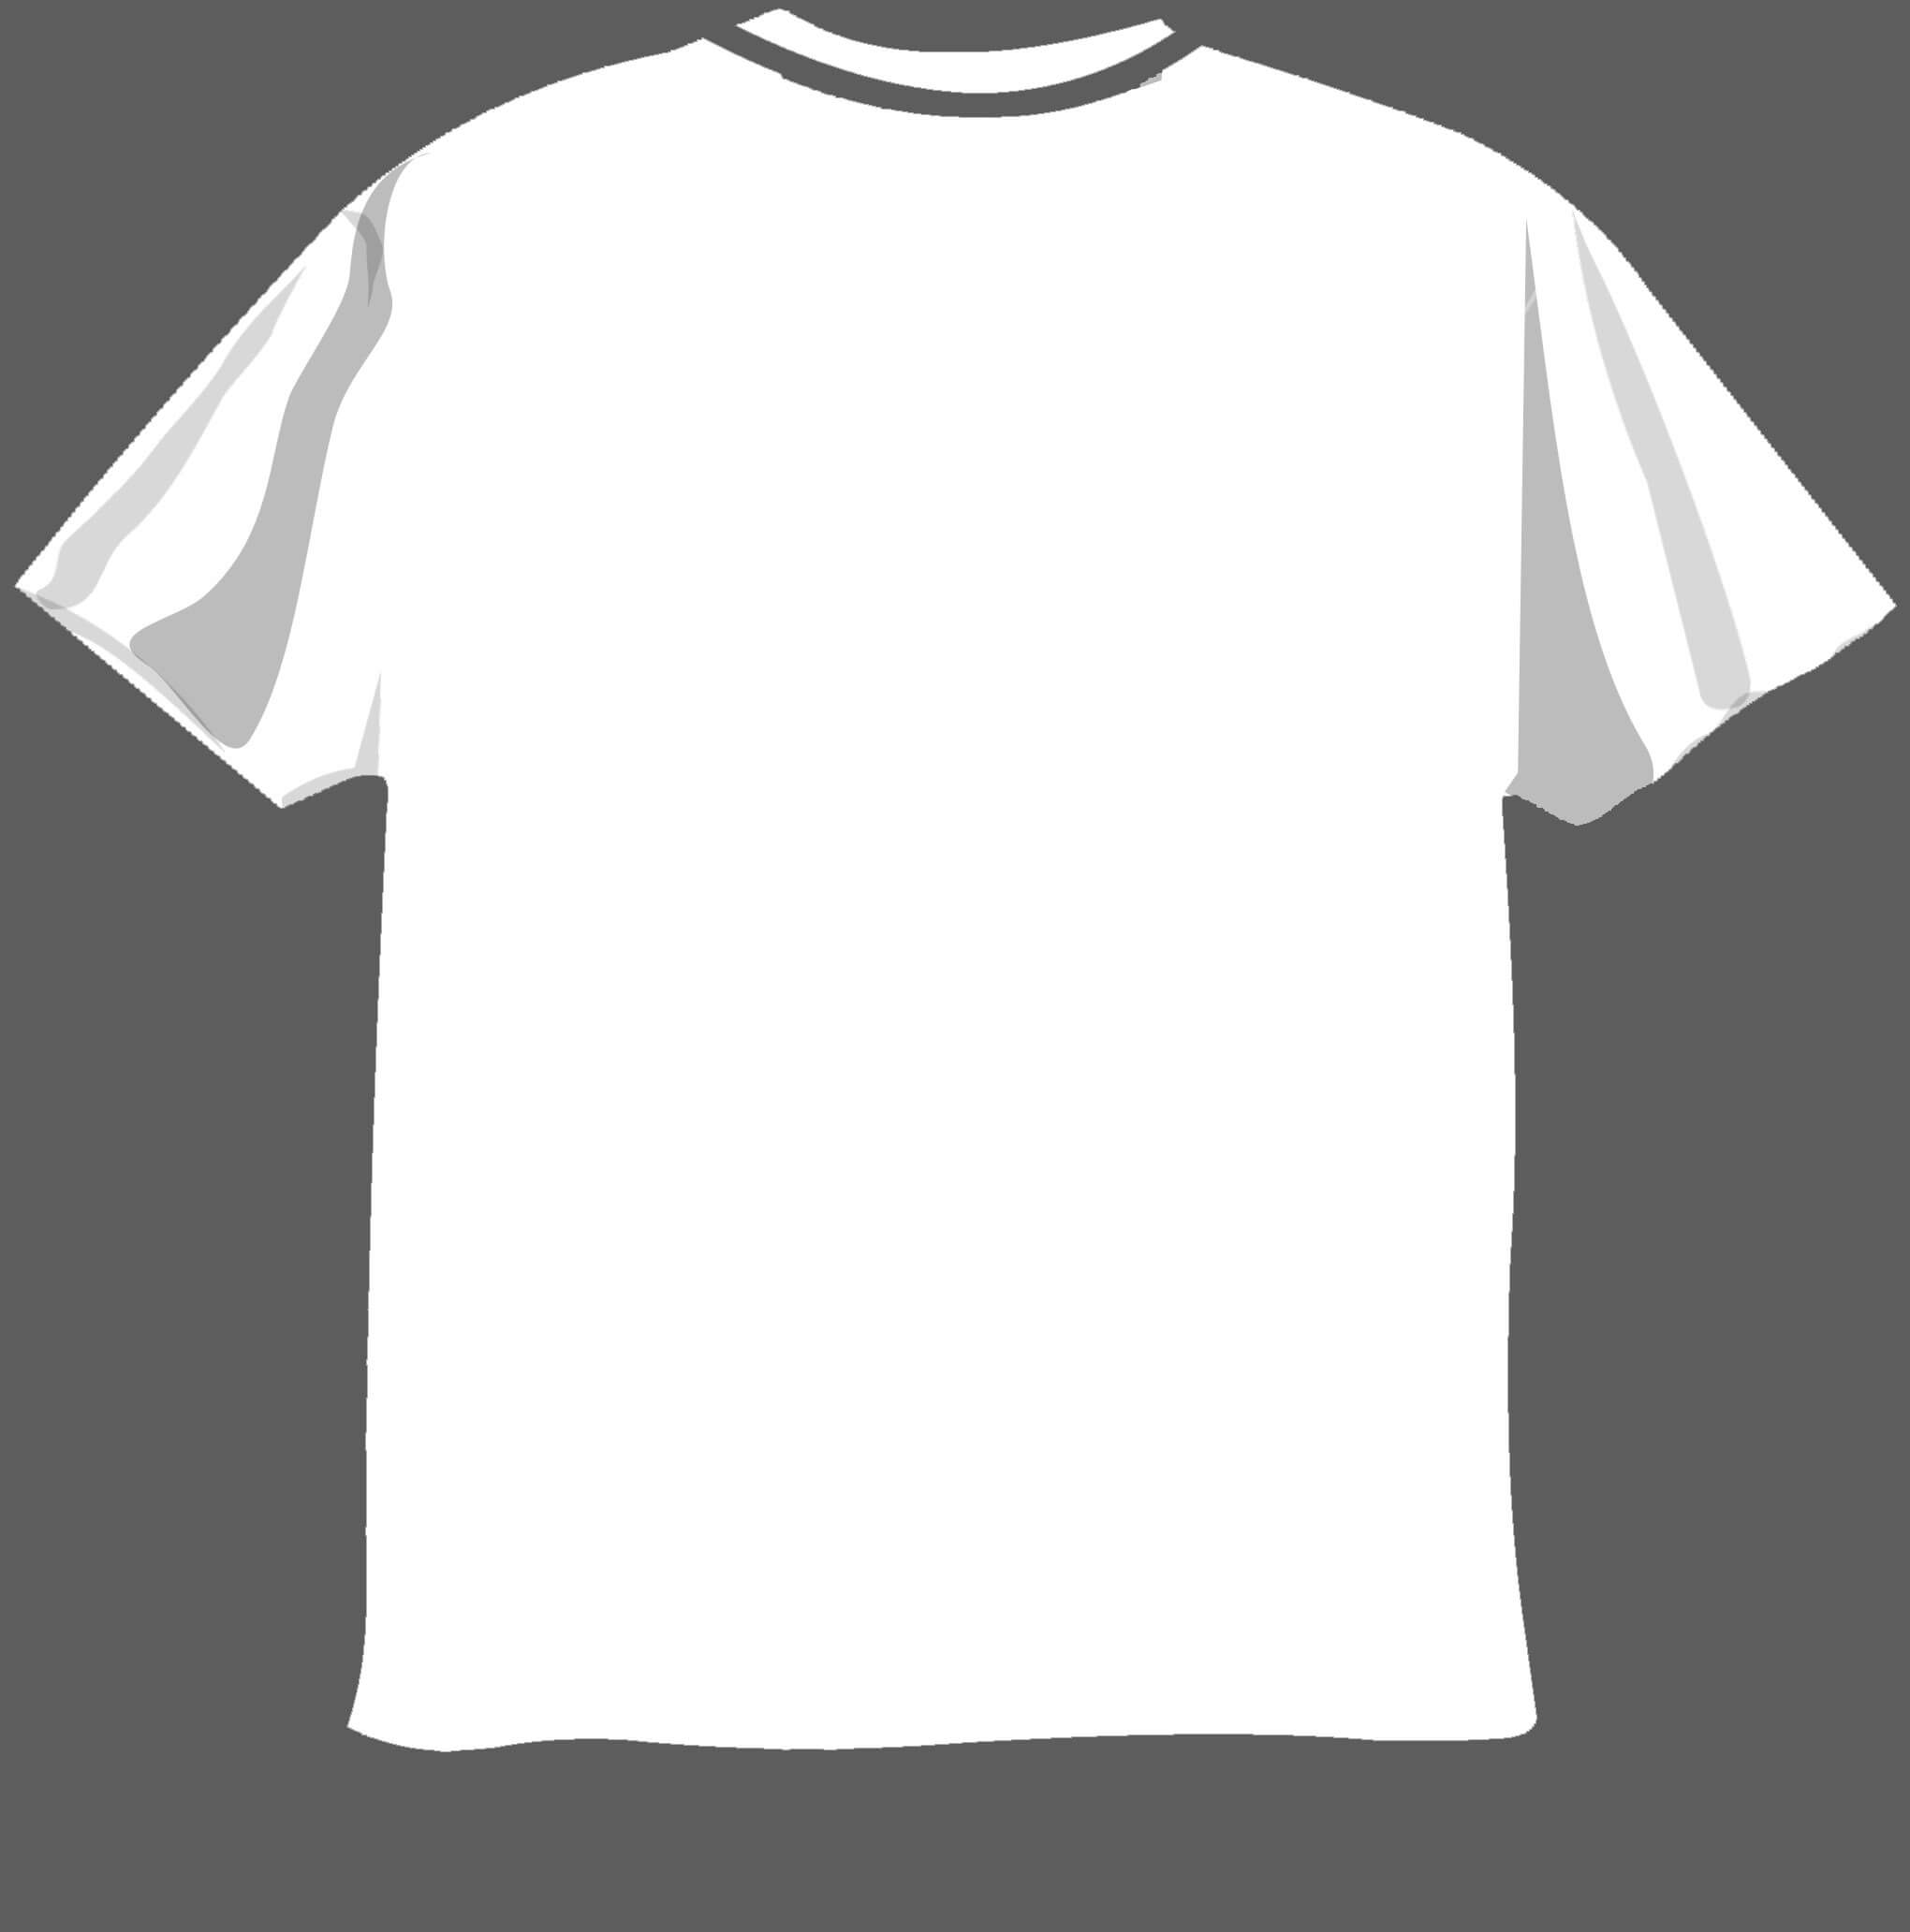 20 T Shirt Design Template Photoshop Images – Shirt Design With Regard To Blank T Shirt Design Template Psd